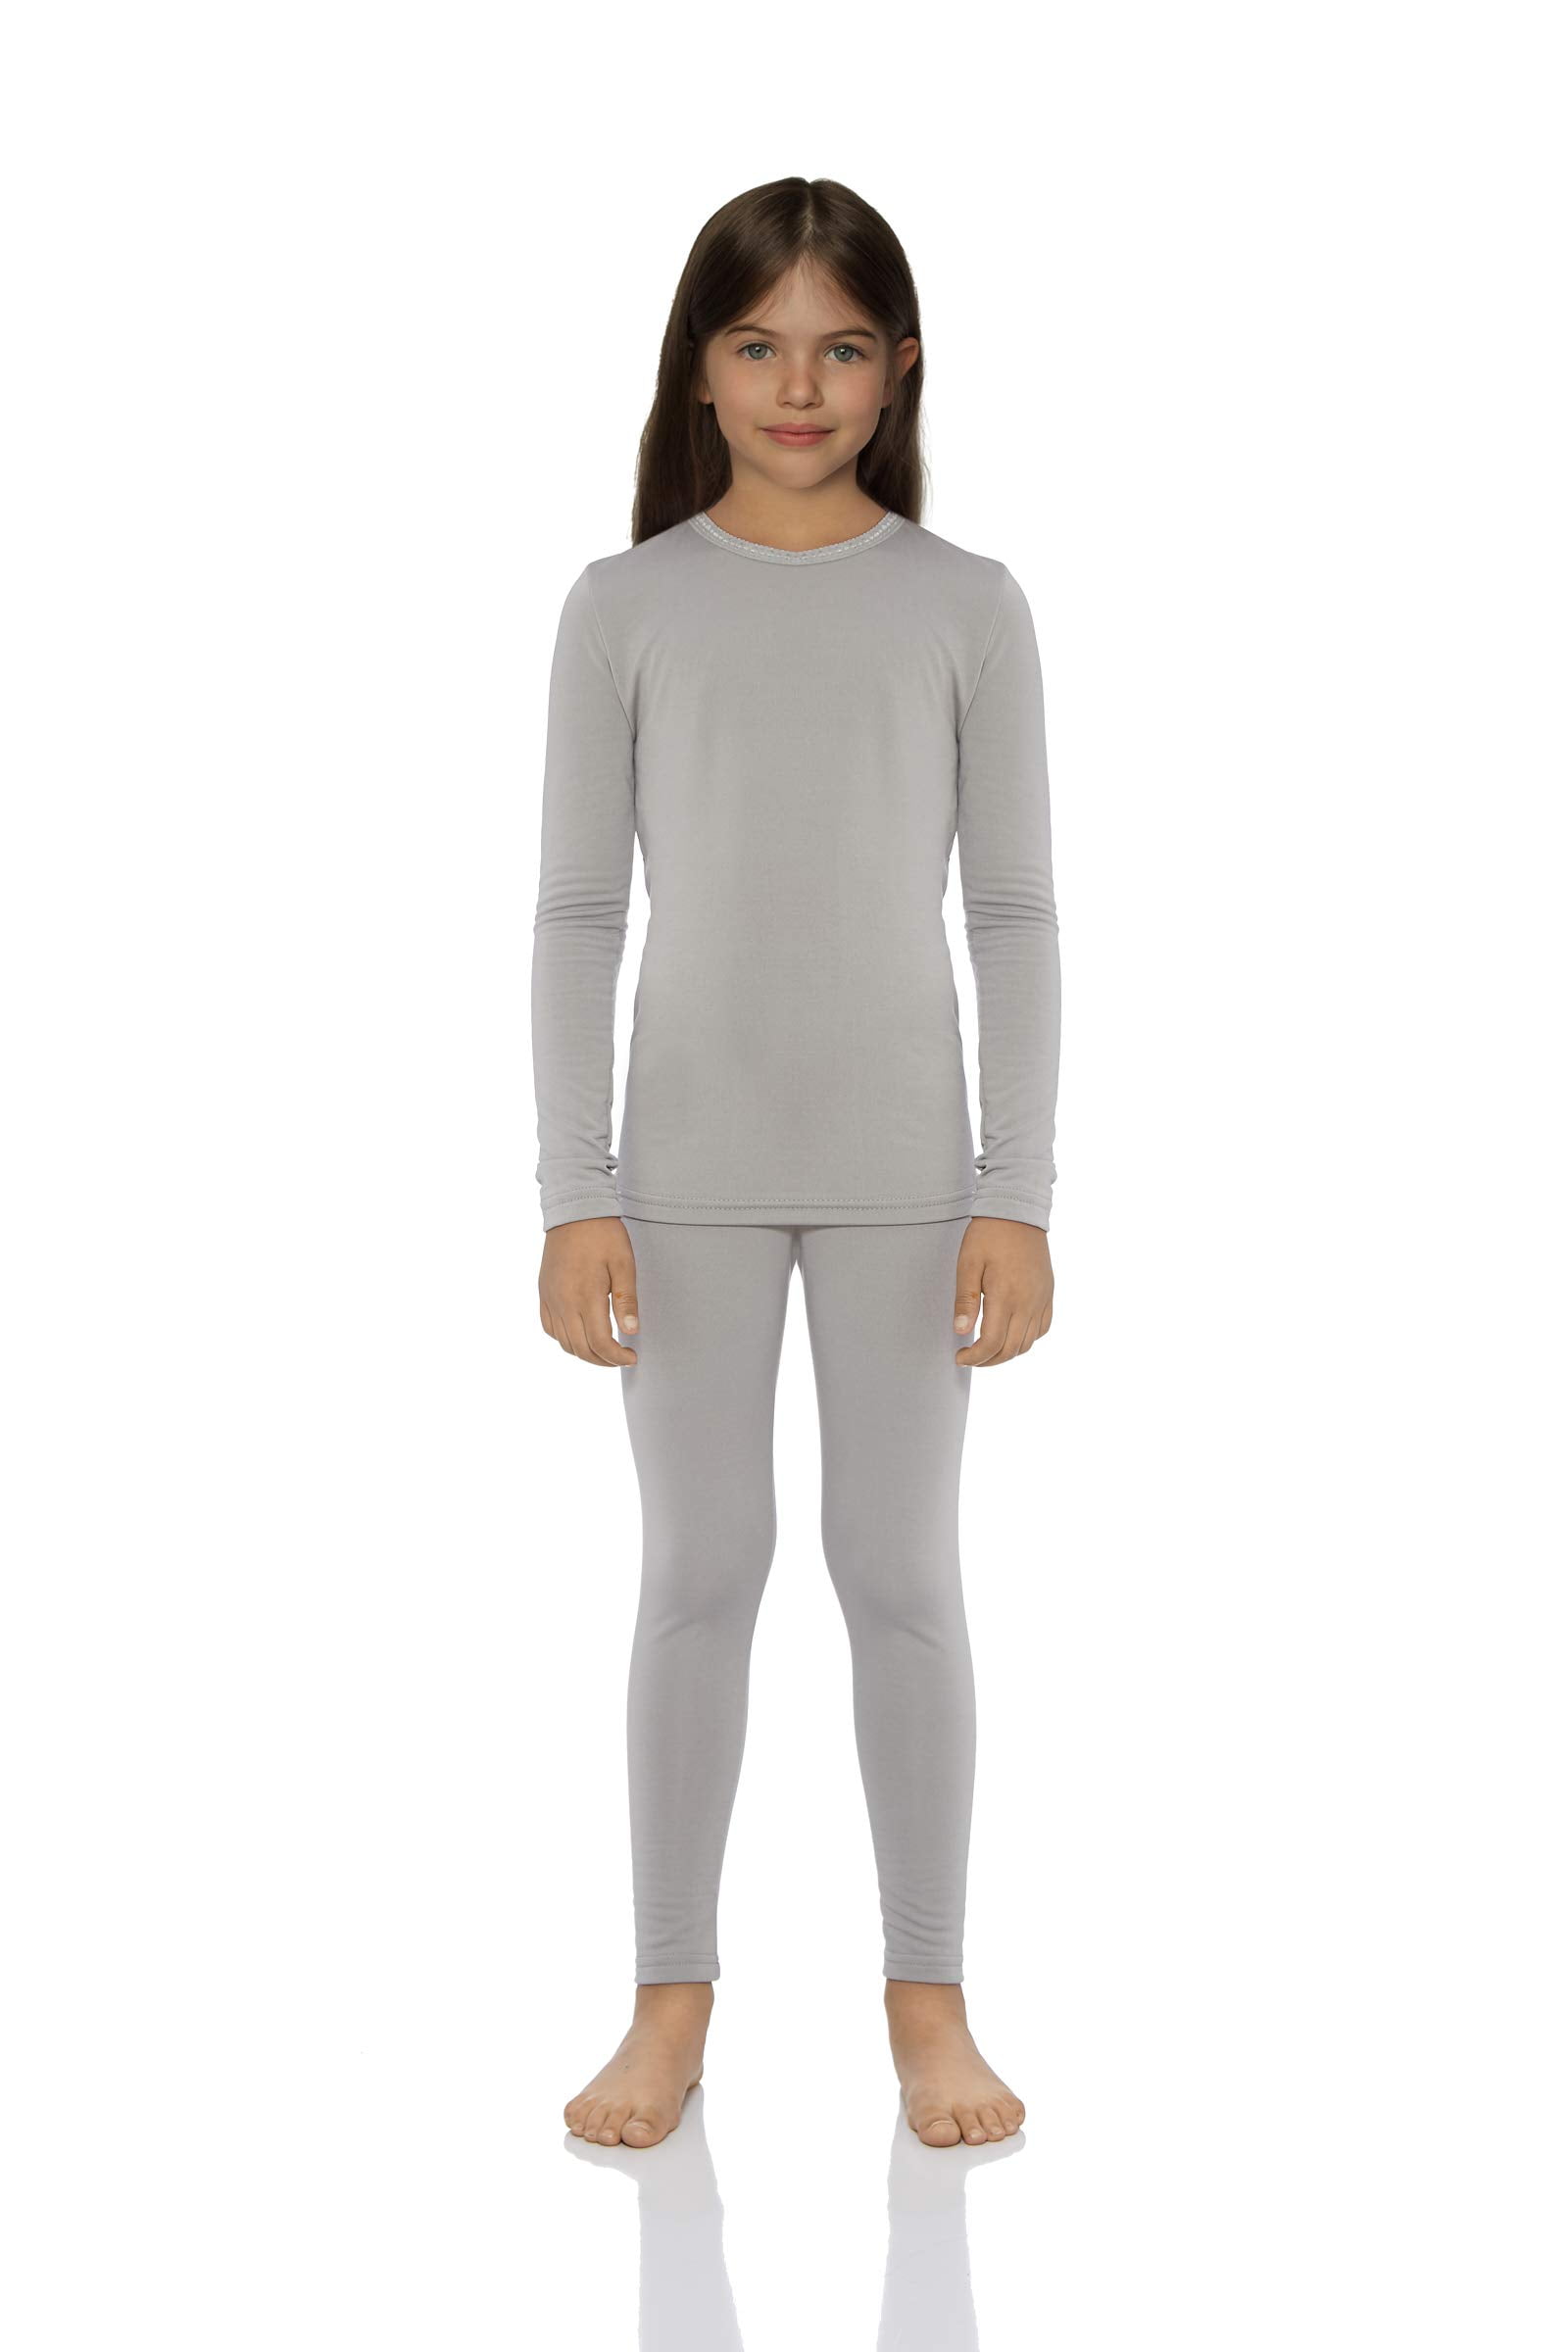 Rocky Thermal Underwear for Girls Cotton Knit Thermals Kids Base Layer Long  John Pajamas Set (Grey - X-Small)